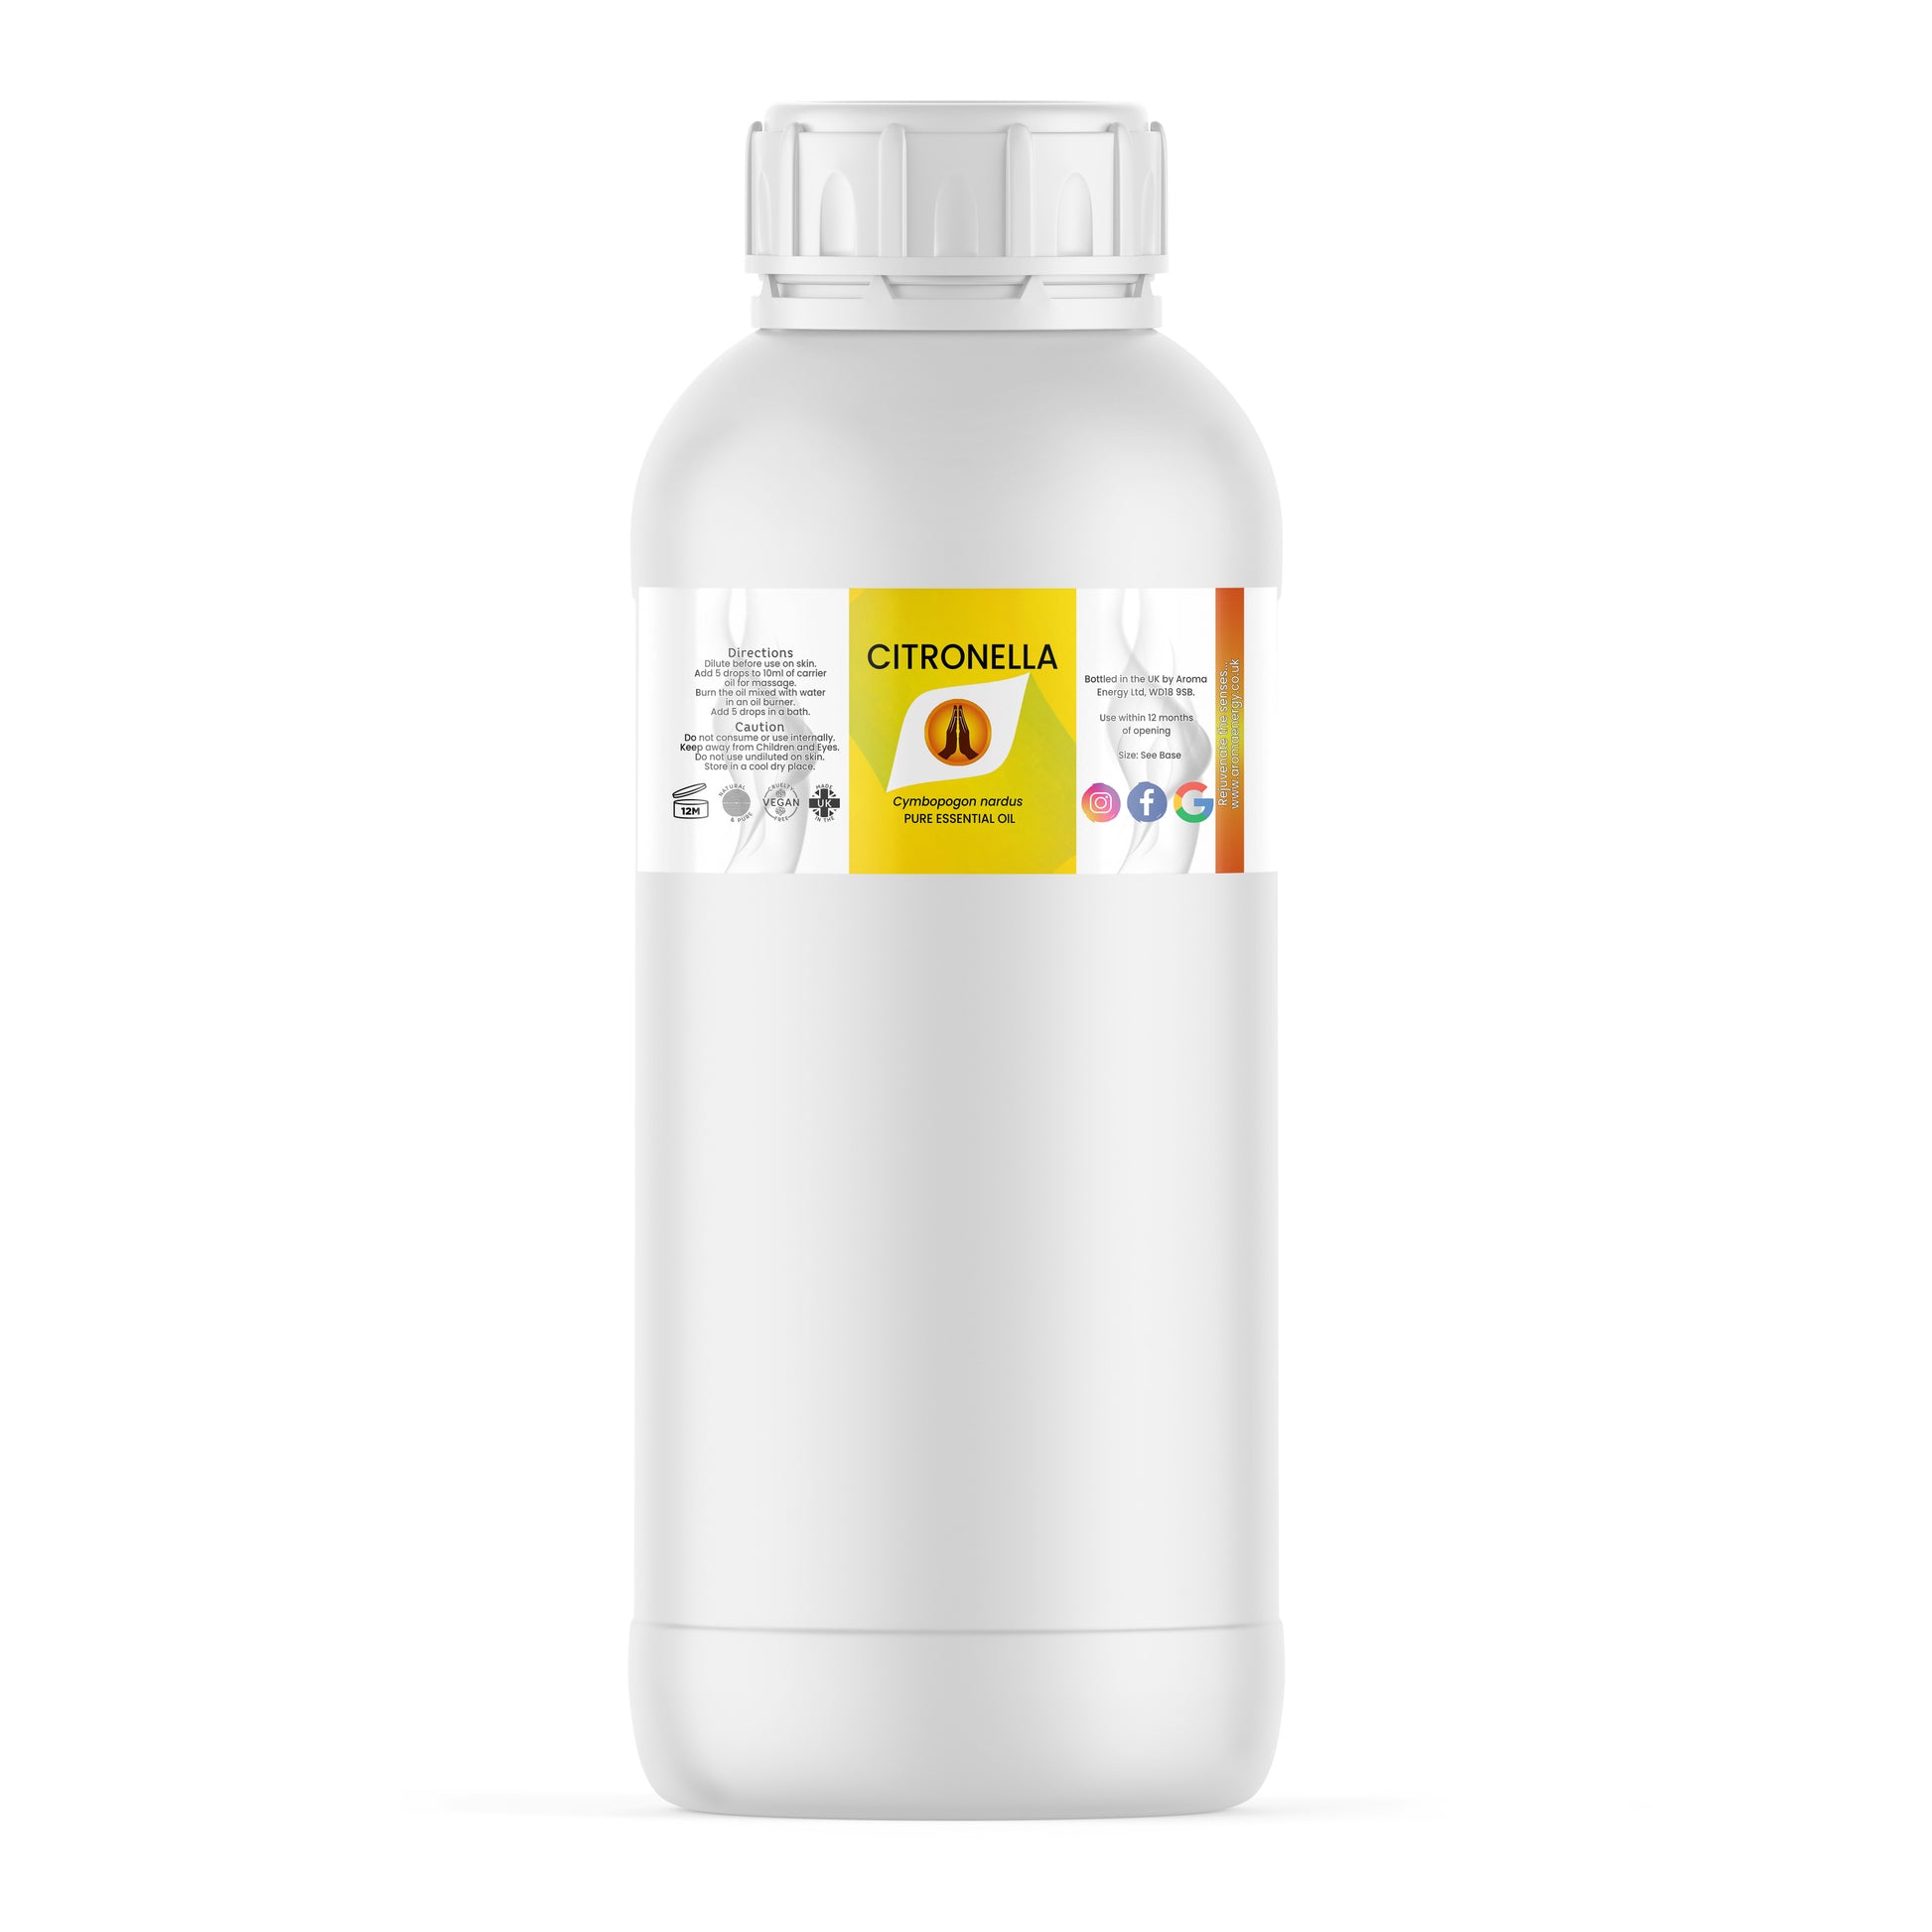 Citronella Pure Essential Oil - Aroma Energy